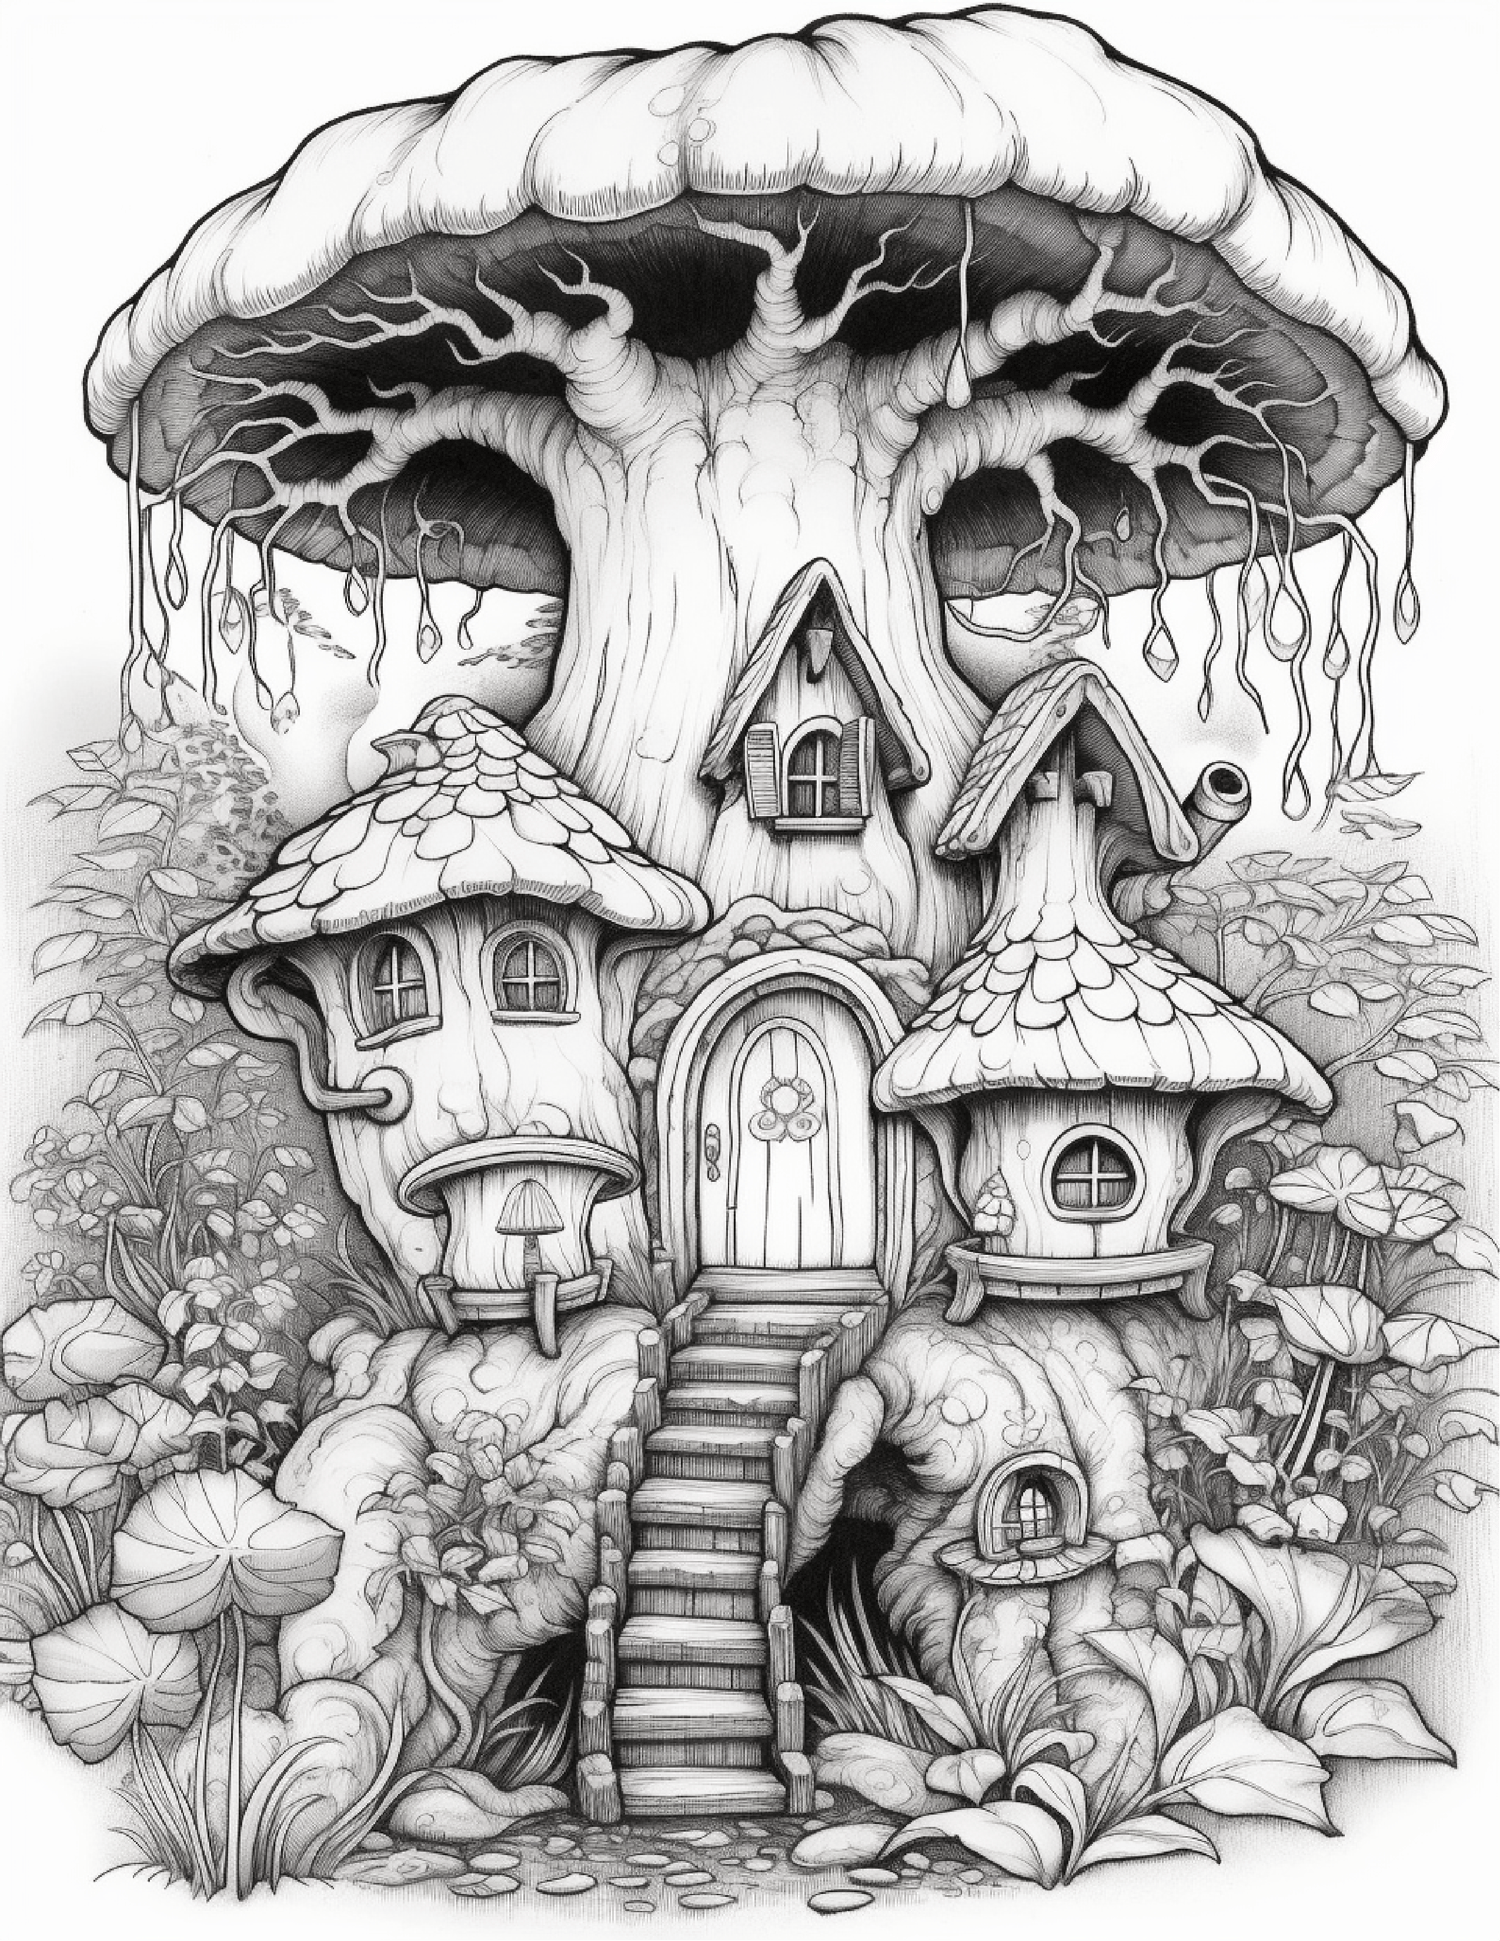 Mushroom Fairy House Coloring Page Coloring Sheets Magic Mushroom Instant  Download Fantasy Coloring Adult Coloring Book (Download Now) 